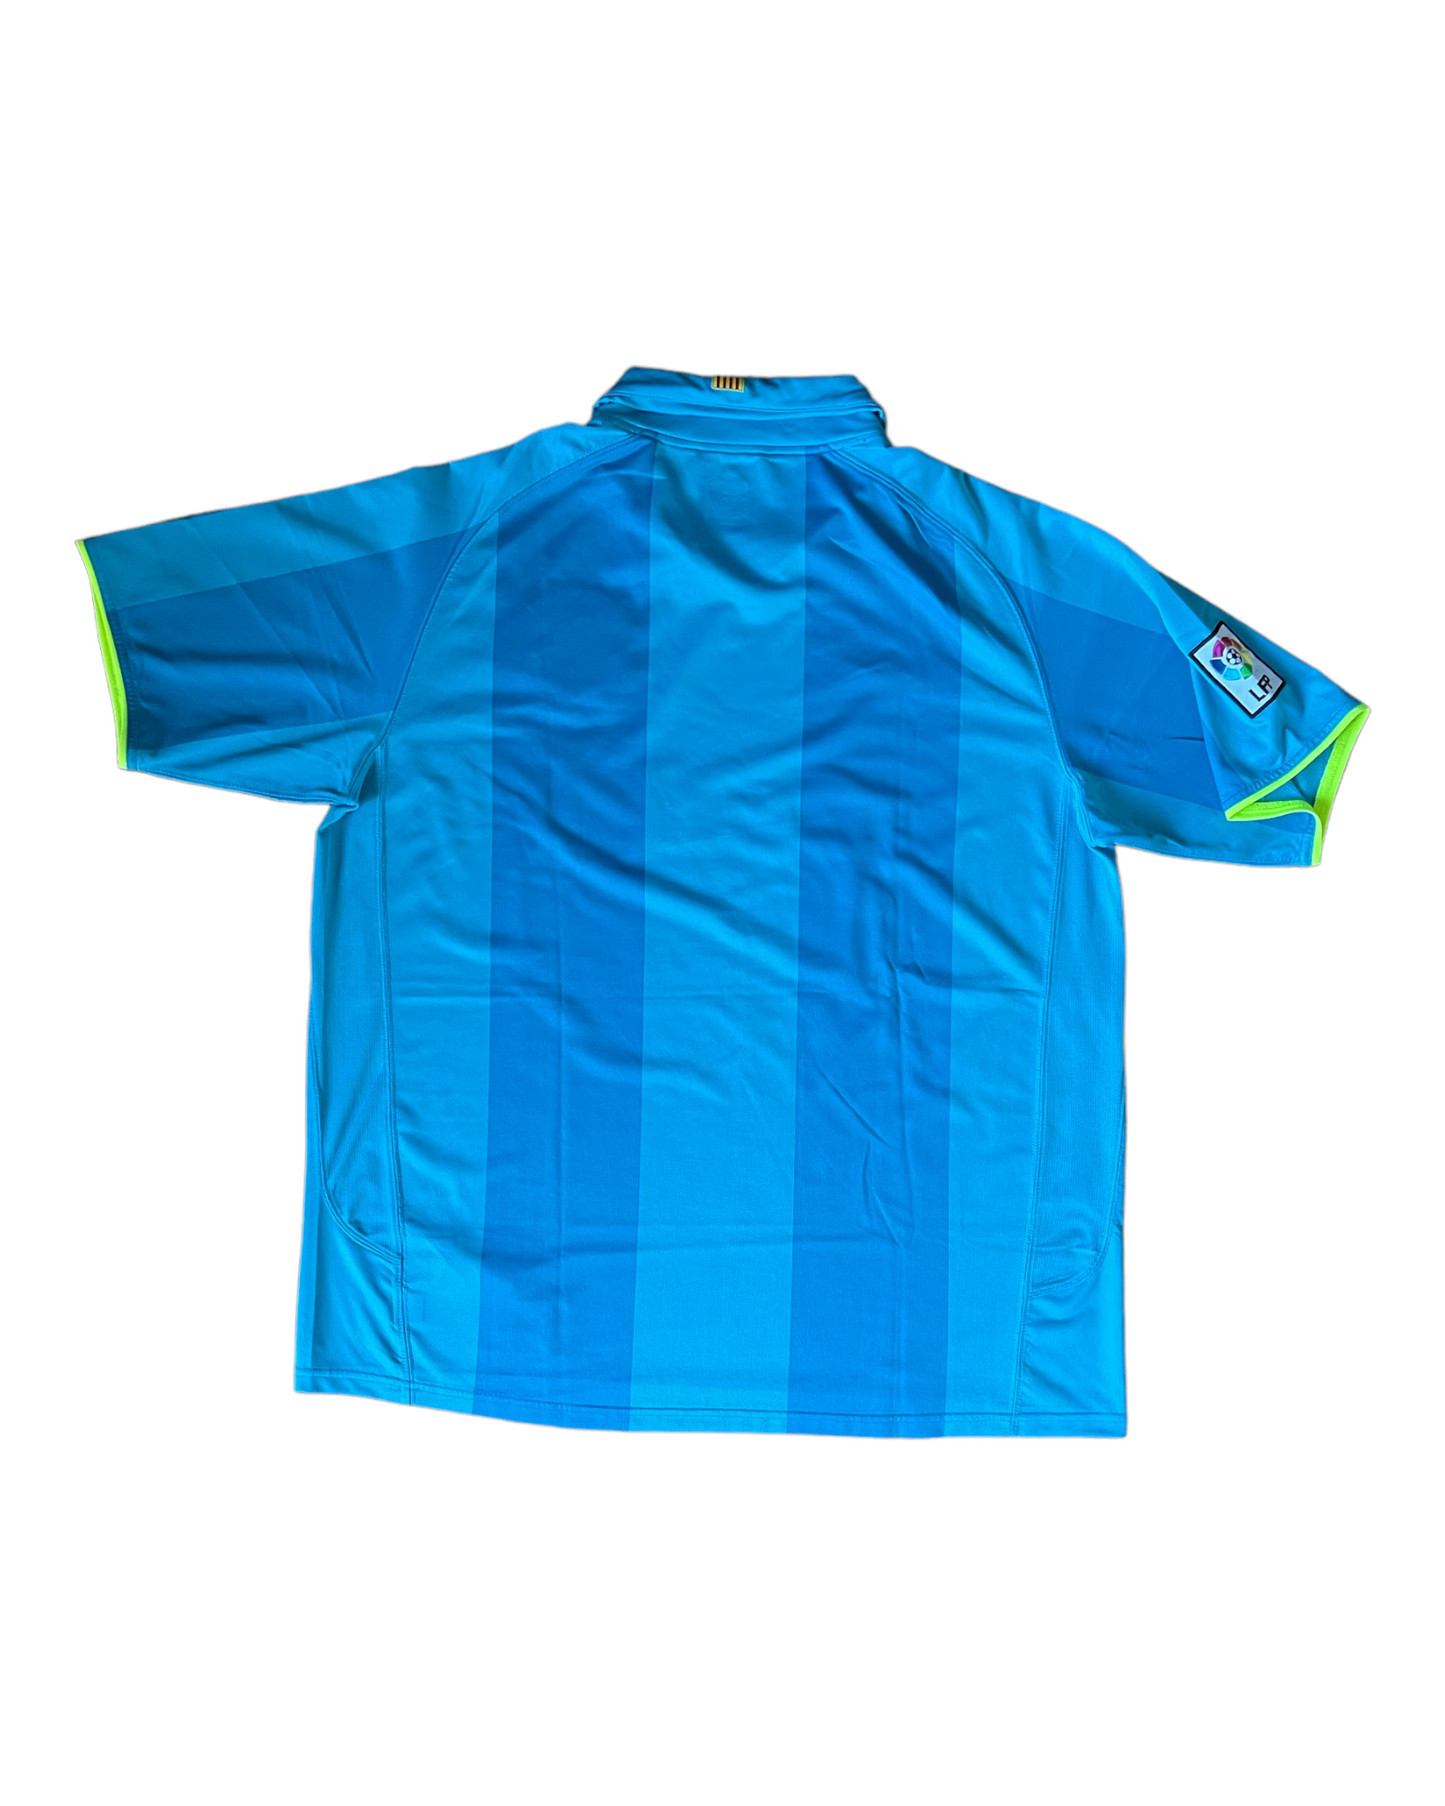 Barcelona Nike 2007-2008 Camp Nou 1957-2007 Away Football Shirt Unicef Blue Size XXL